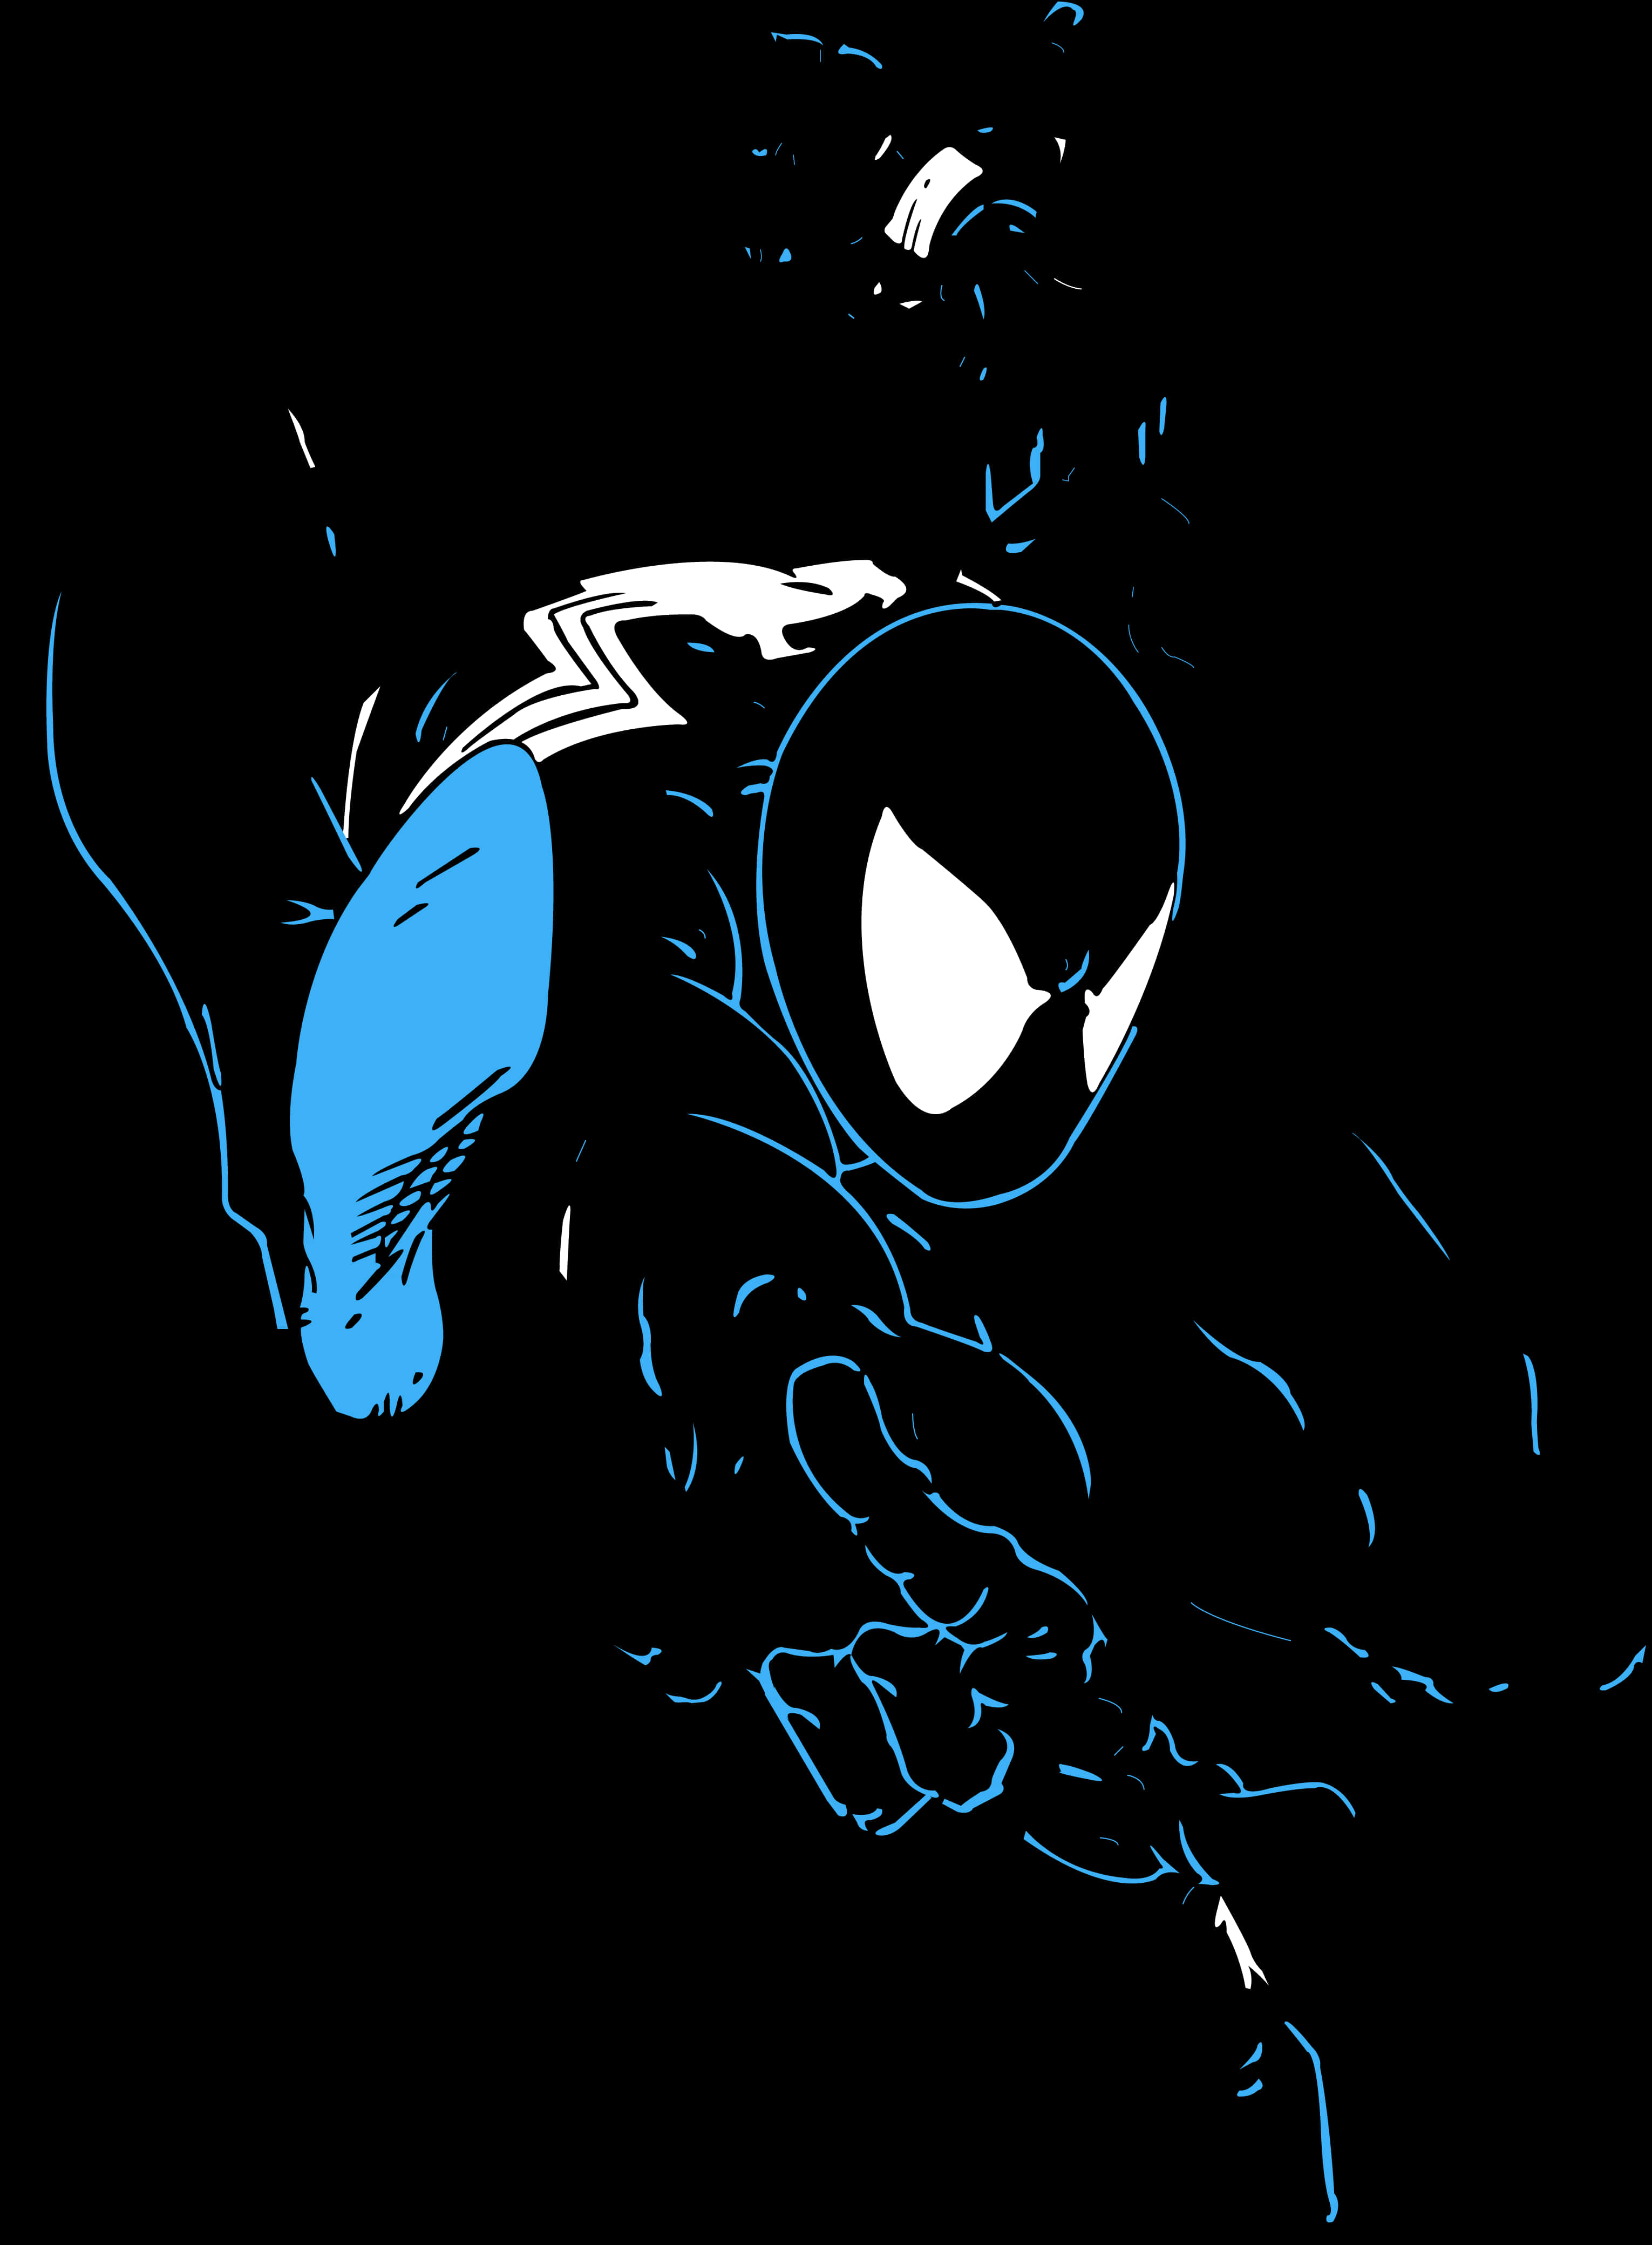 A Cartoon Of A Spiderman